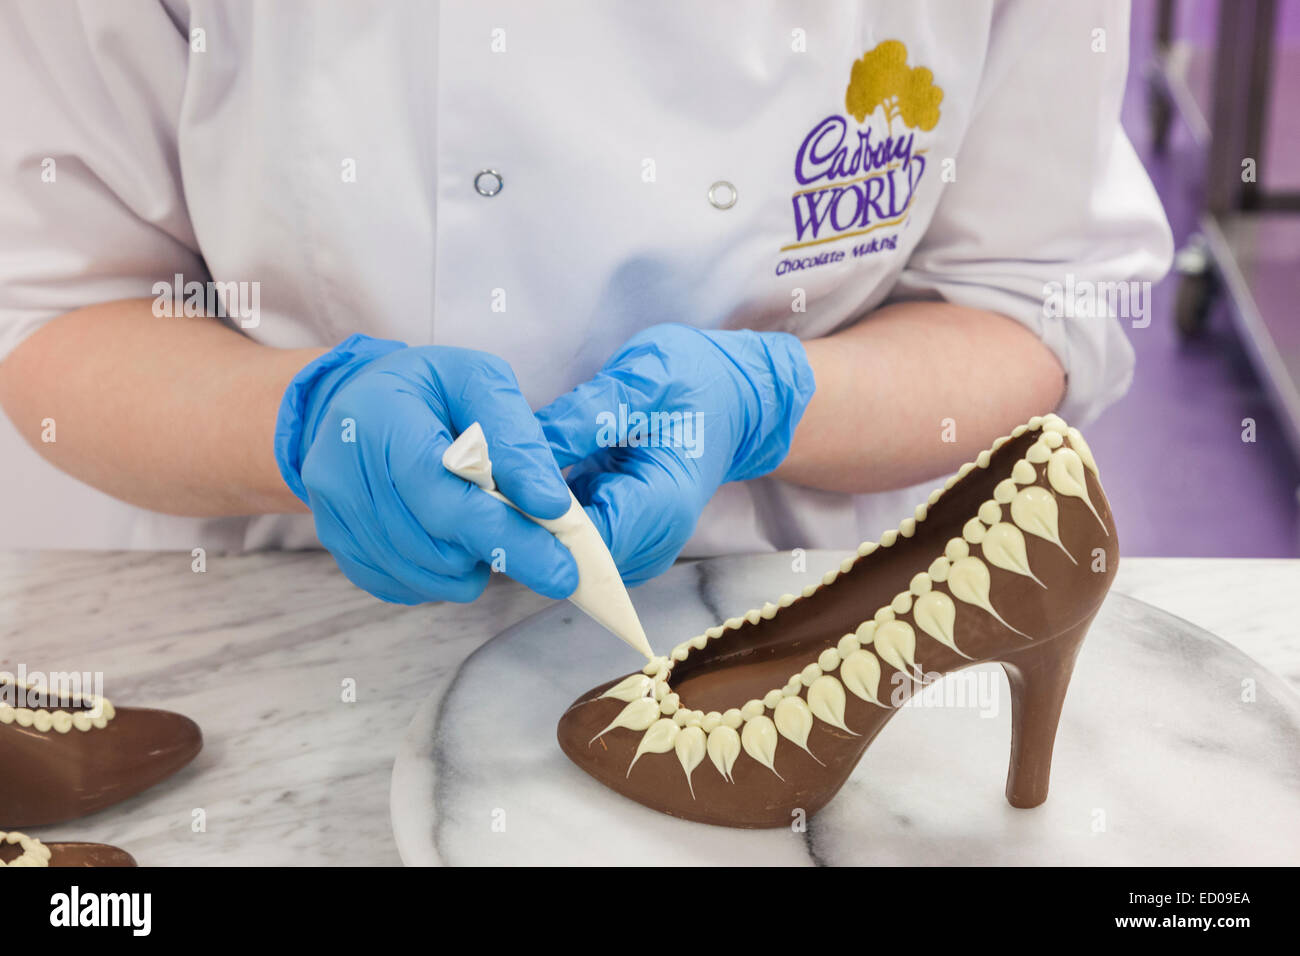 England, Birmingham, Bournville, Cadbury World, Woman Decorating Chocolate Shoe Stock Photo